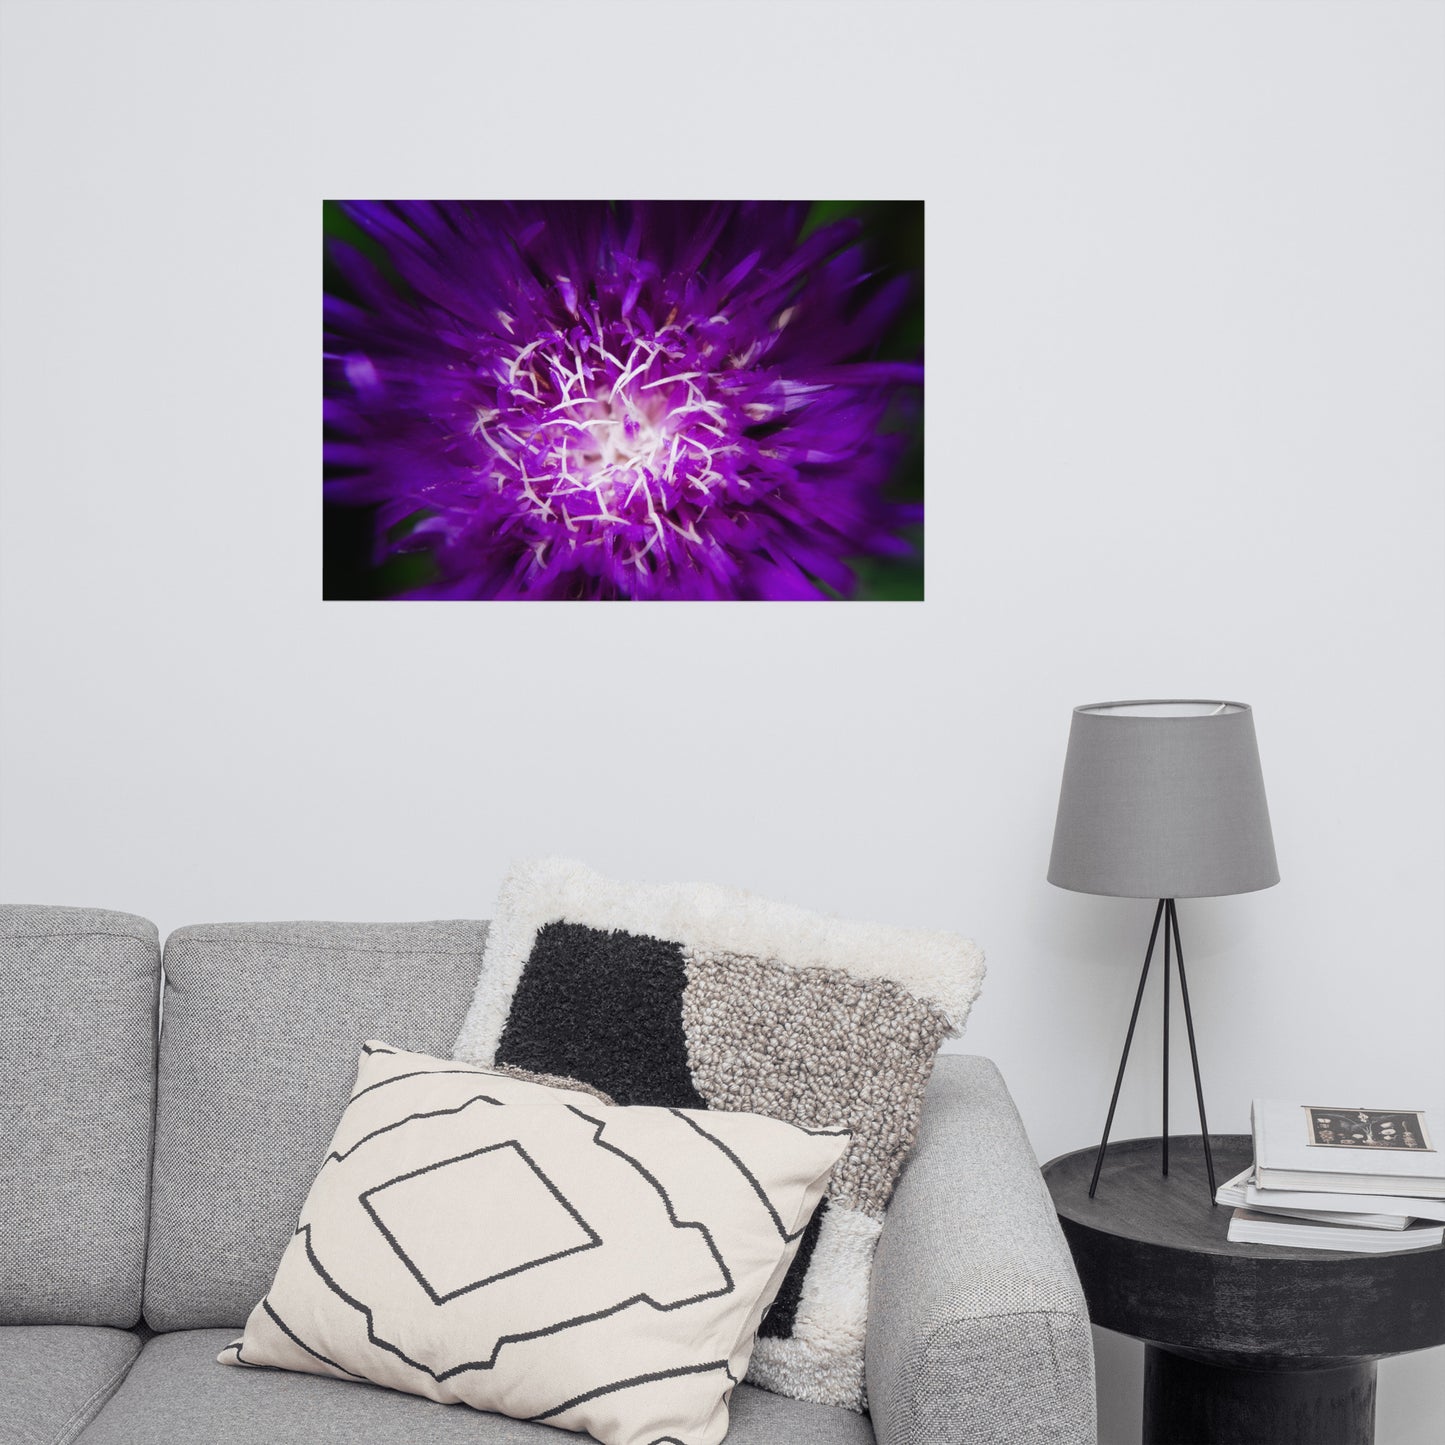 Living Room Wall Decor Minimalist: Dark Purple and White Aster Bloom Close-up - Botanical / Floral / Flora / Flowers / Nature Photograph Loose / Unframed / Frameless / Frameable Wall Art Print - Artwork